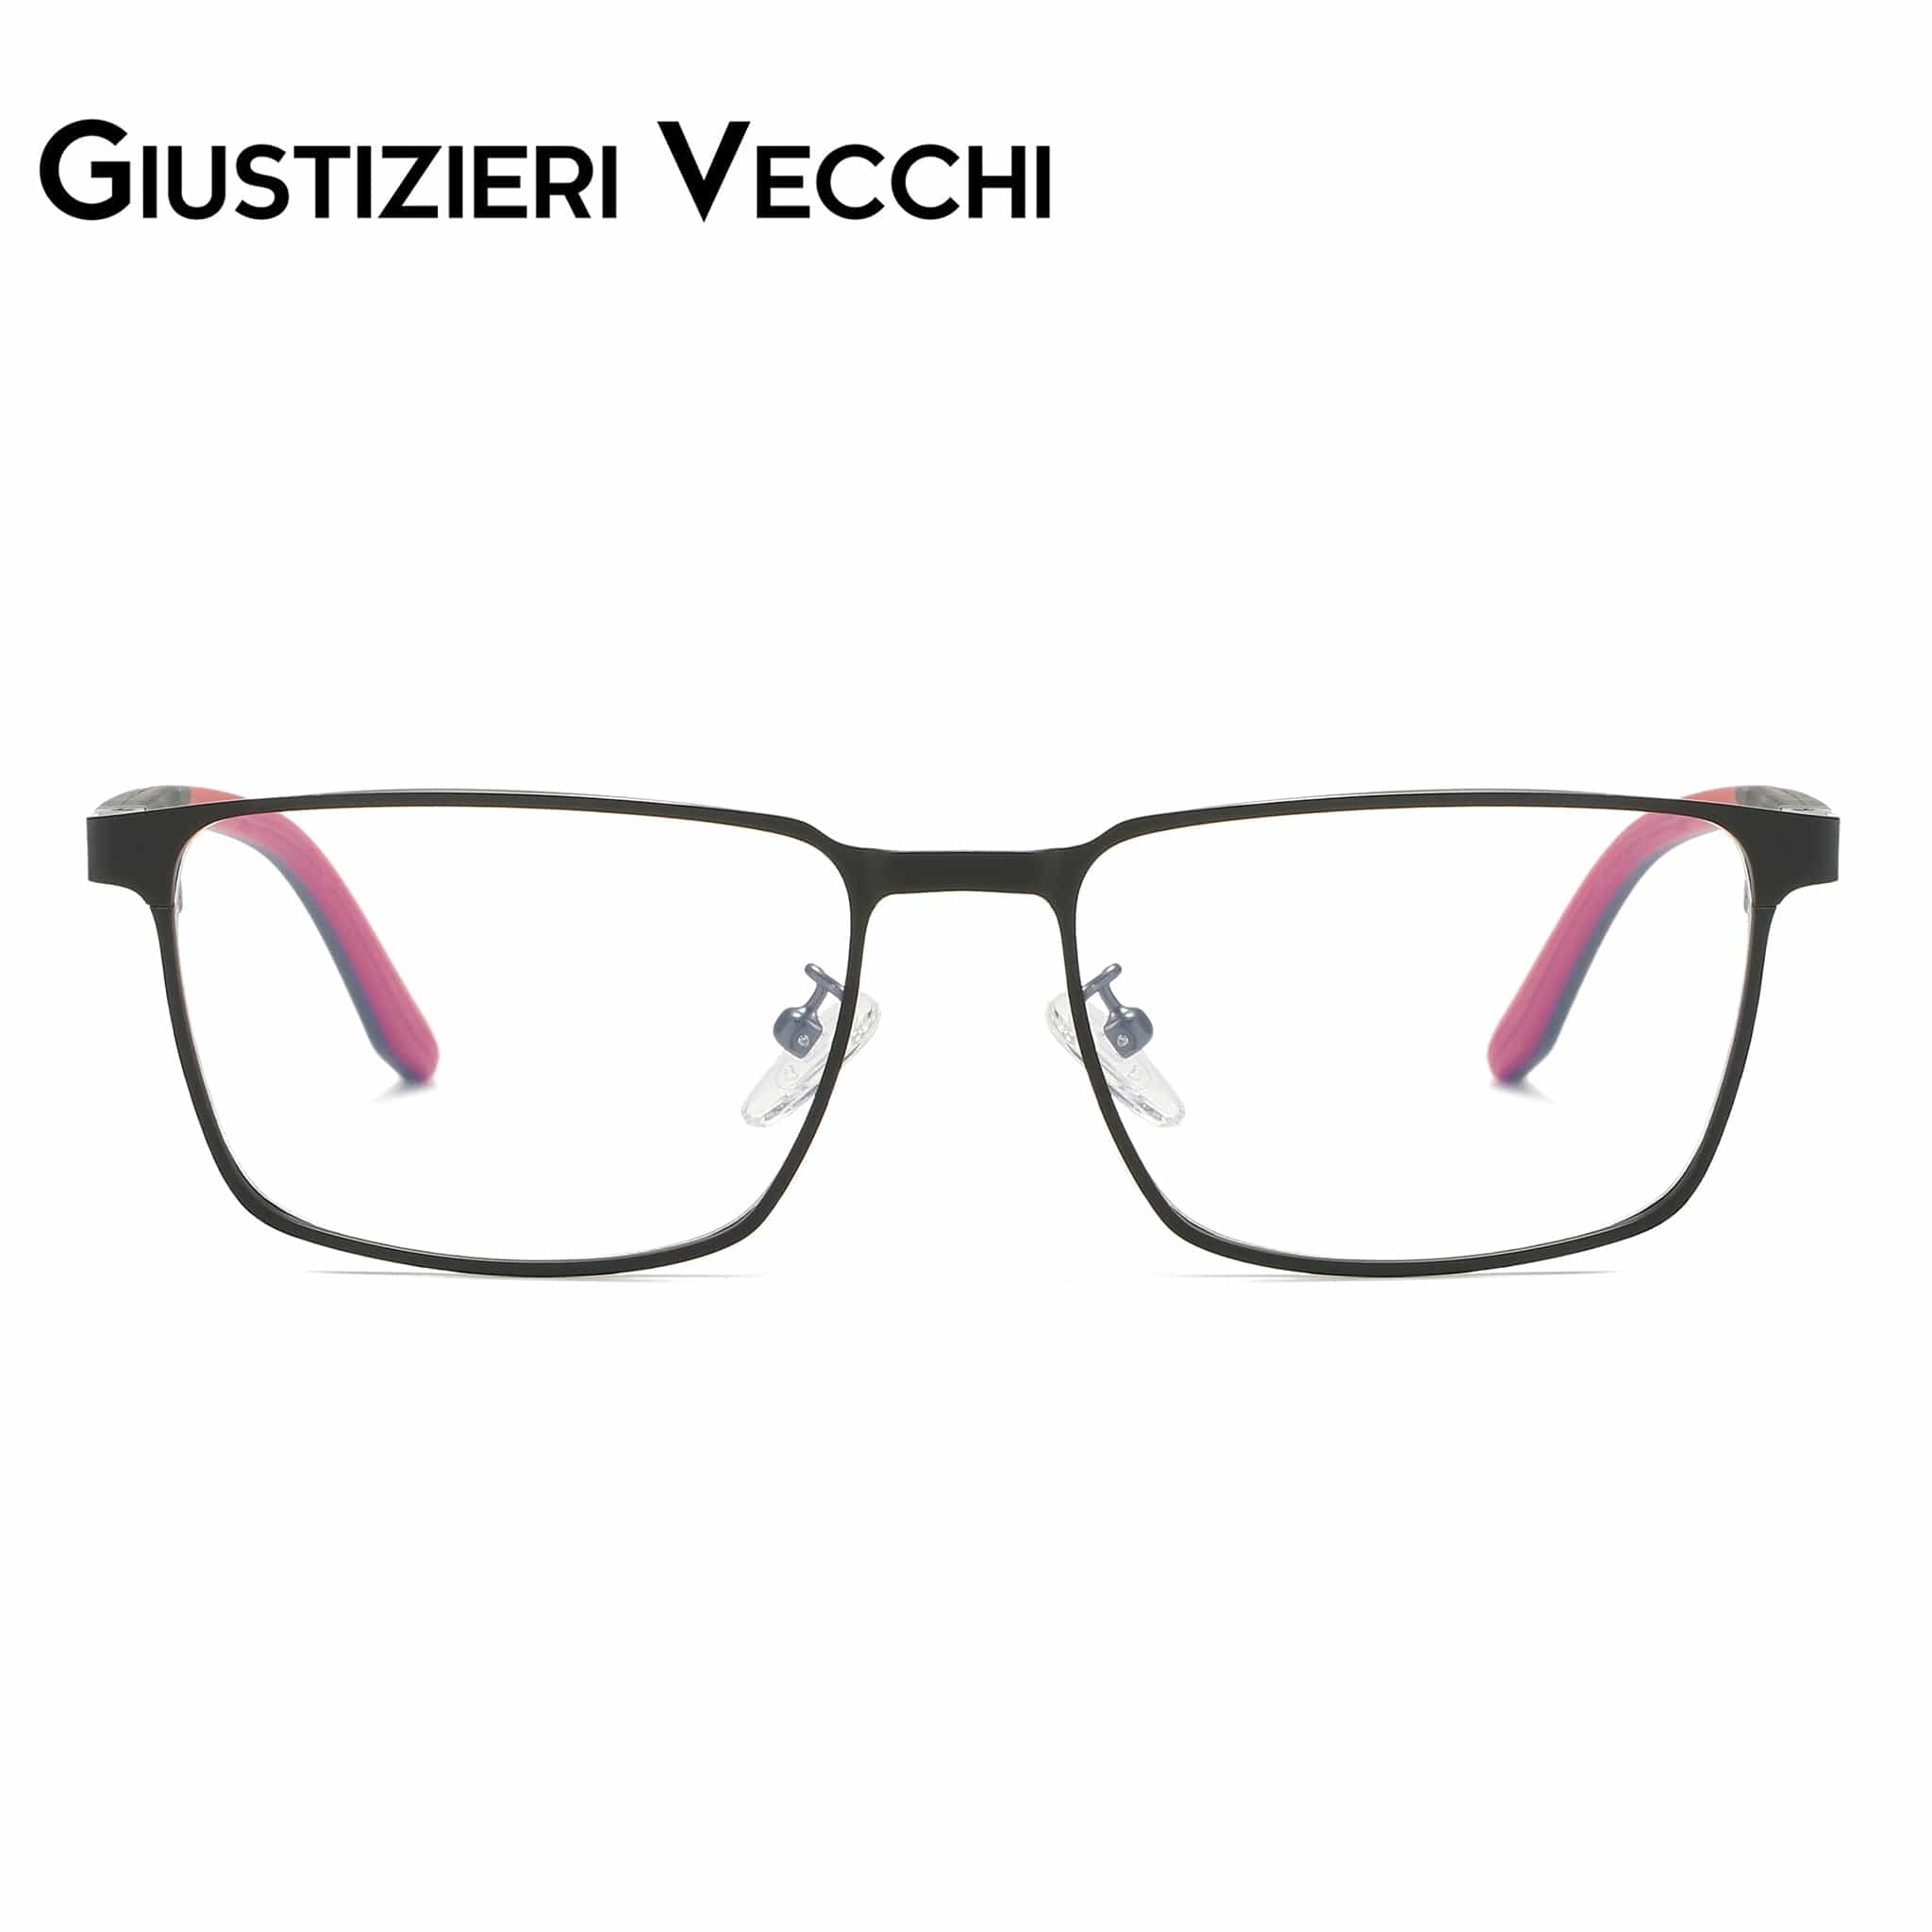 GIUSTIZIERI VECCHI Eyeglasses Black with Red / Large IceSurf Uno